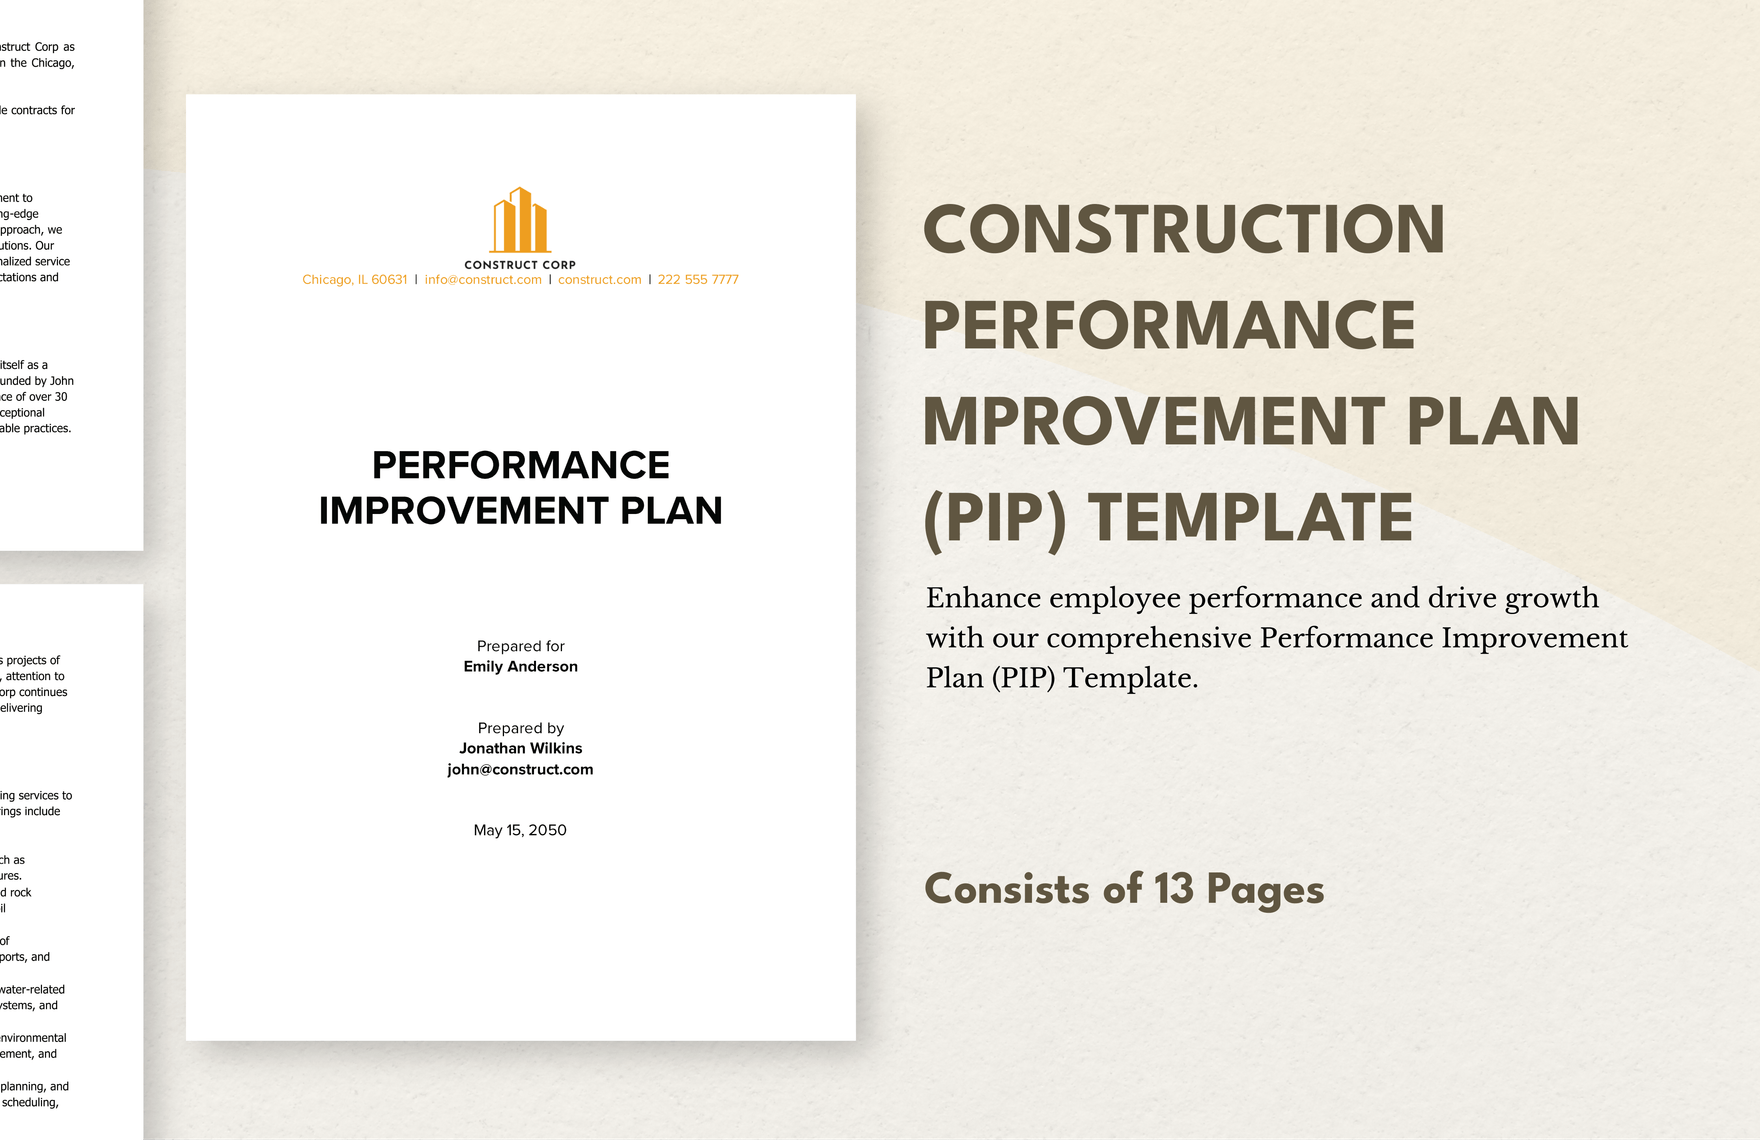 Construction Performance Improvement Plan (PIP) Template